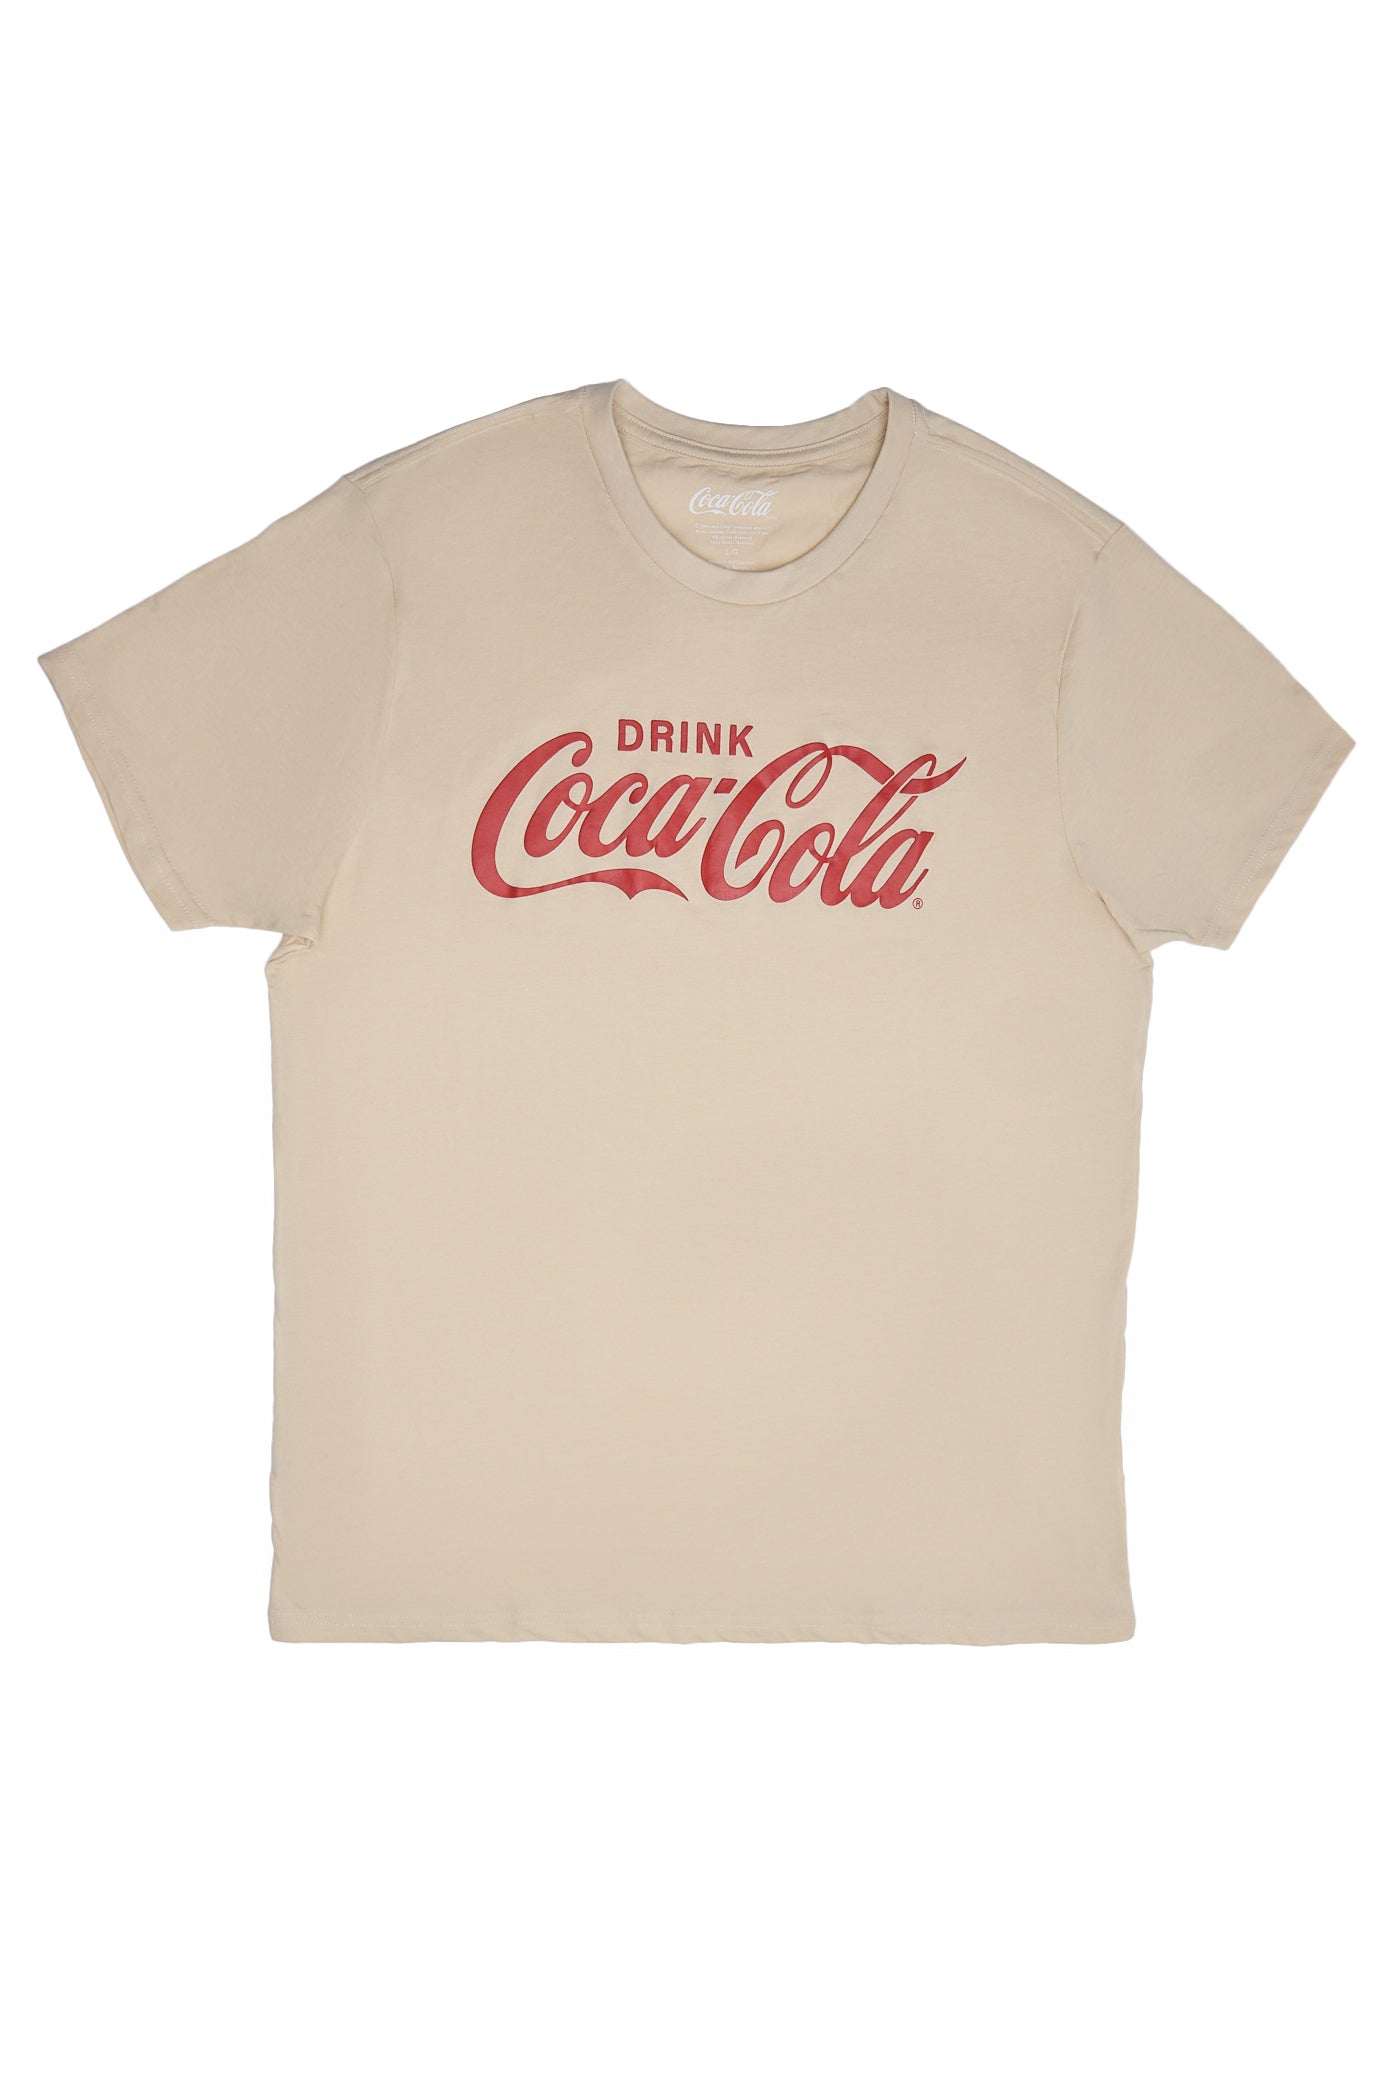 Drink Coca-Cola Graphic Tee